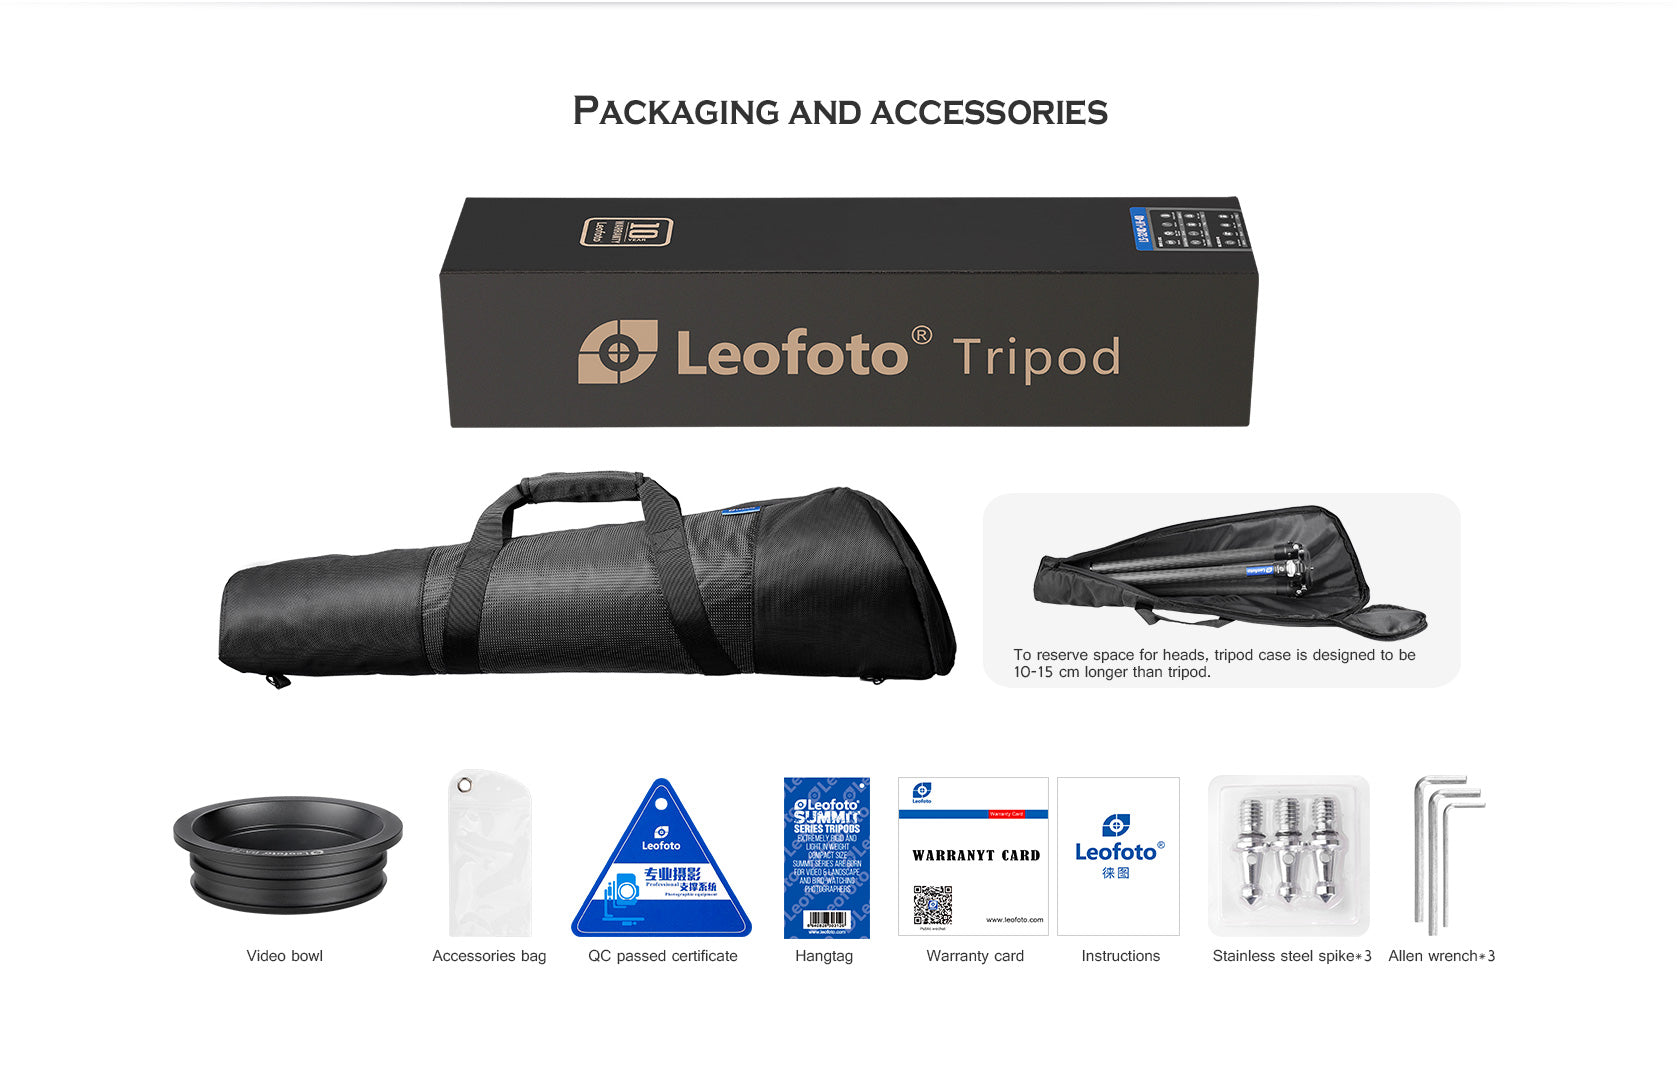 Leofoto LM-404CL(Long) Tripod with 100mm Video Bowl/Platform and Bag | Max Load 88 lb